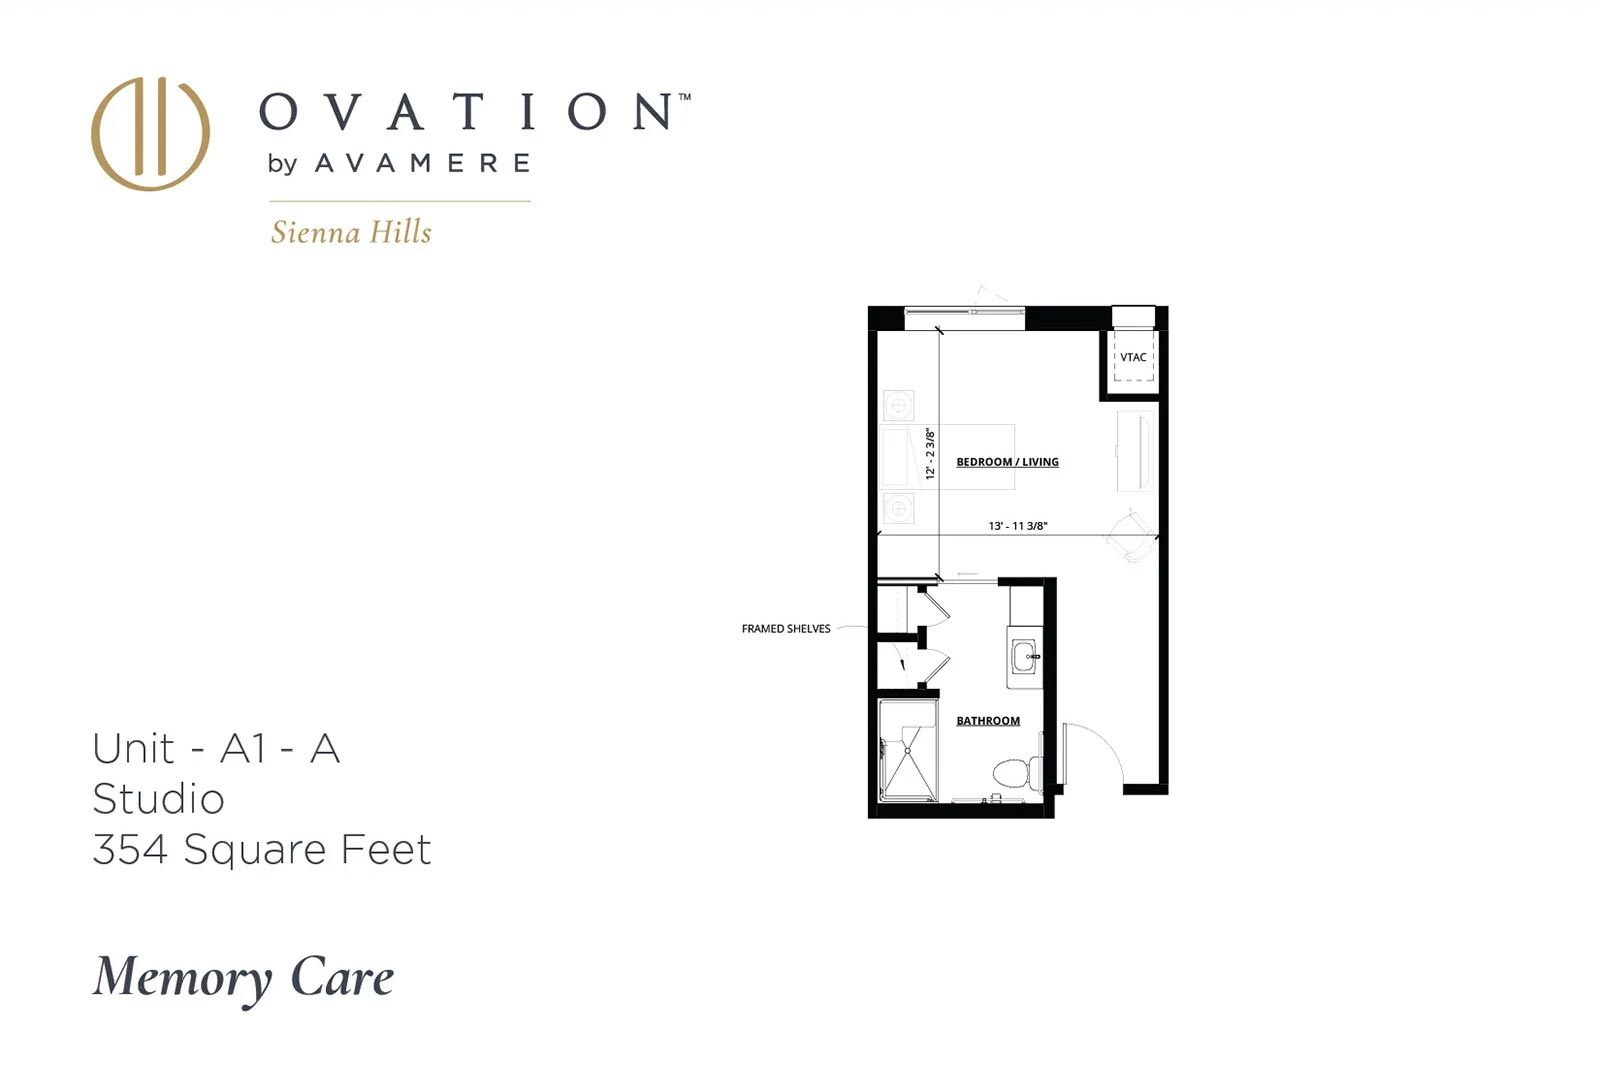 Ovation Sienna Hills Memory Care Studio Floorplan 354 sq ft